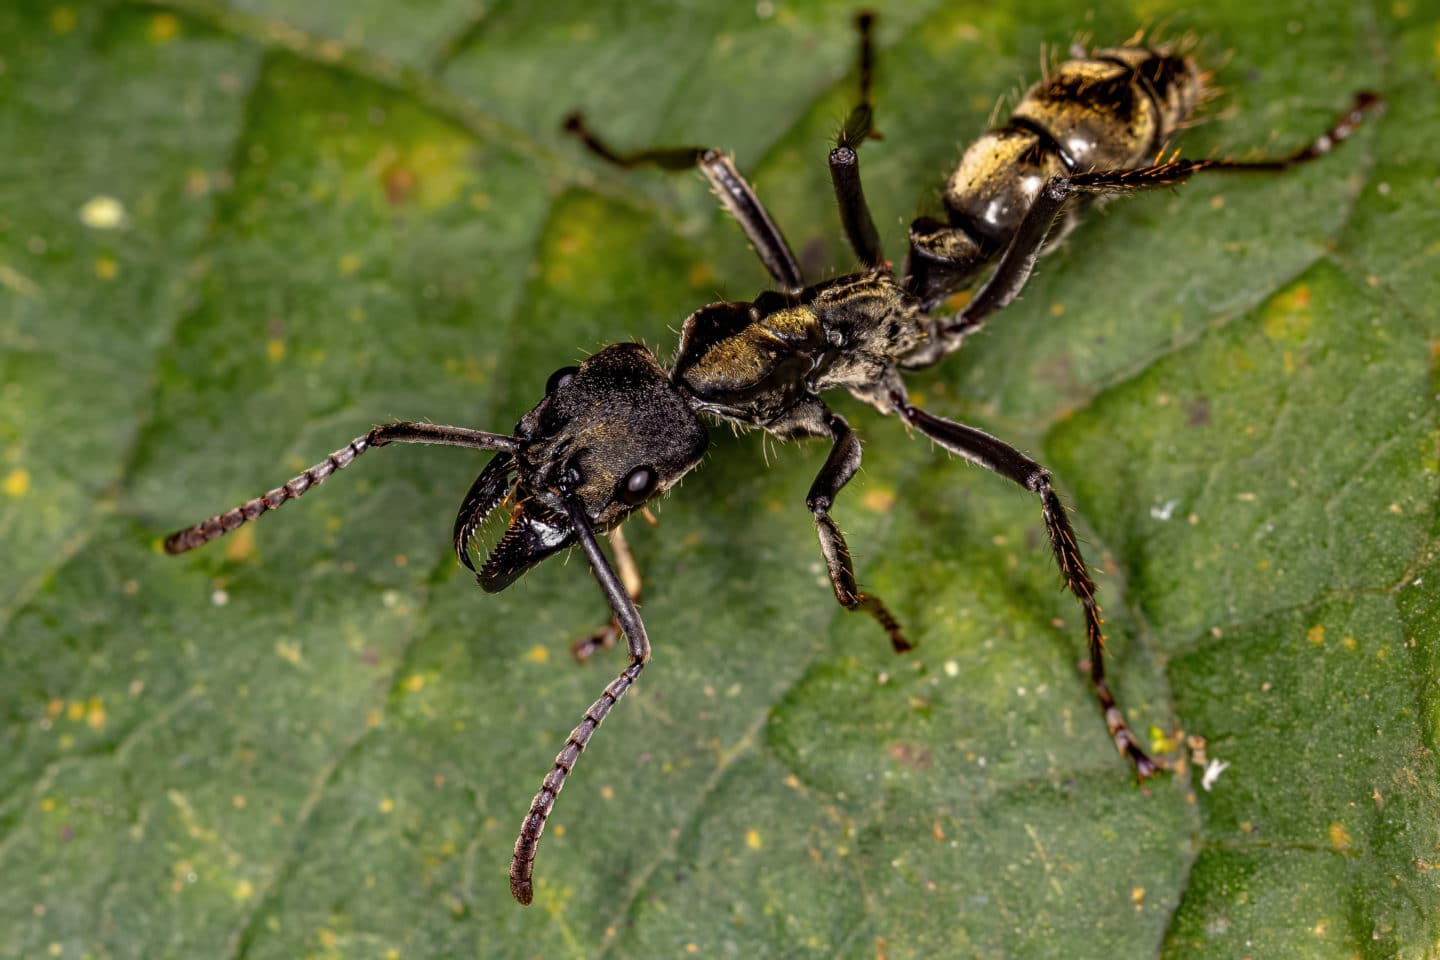 Adult Female Ponerine Ant